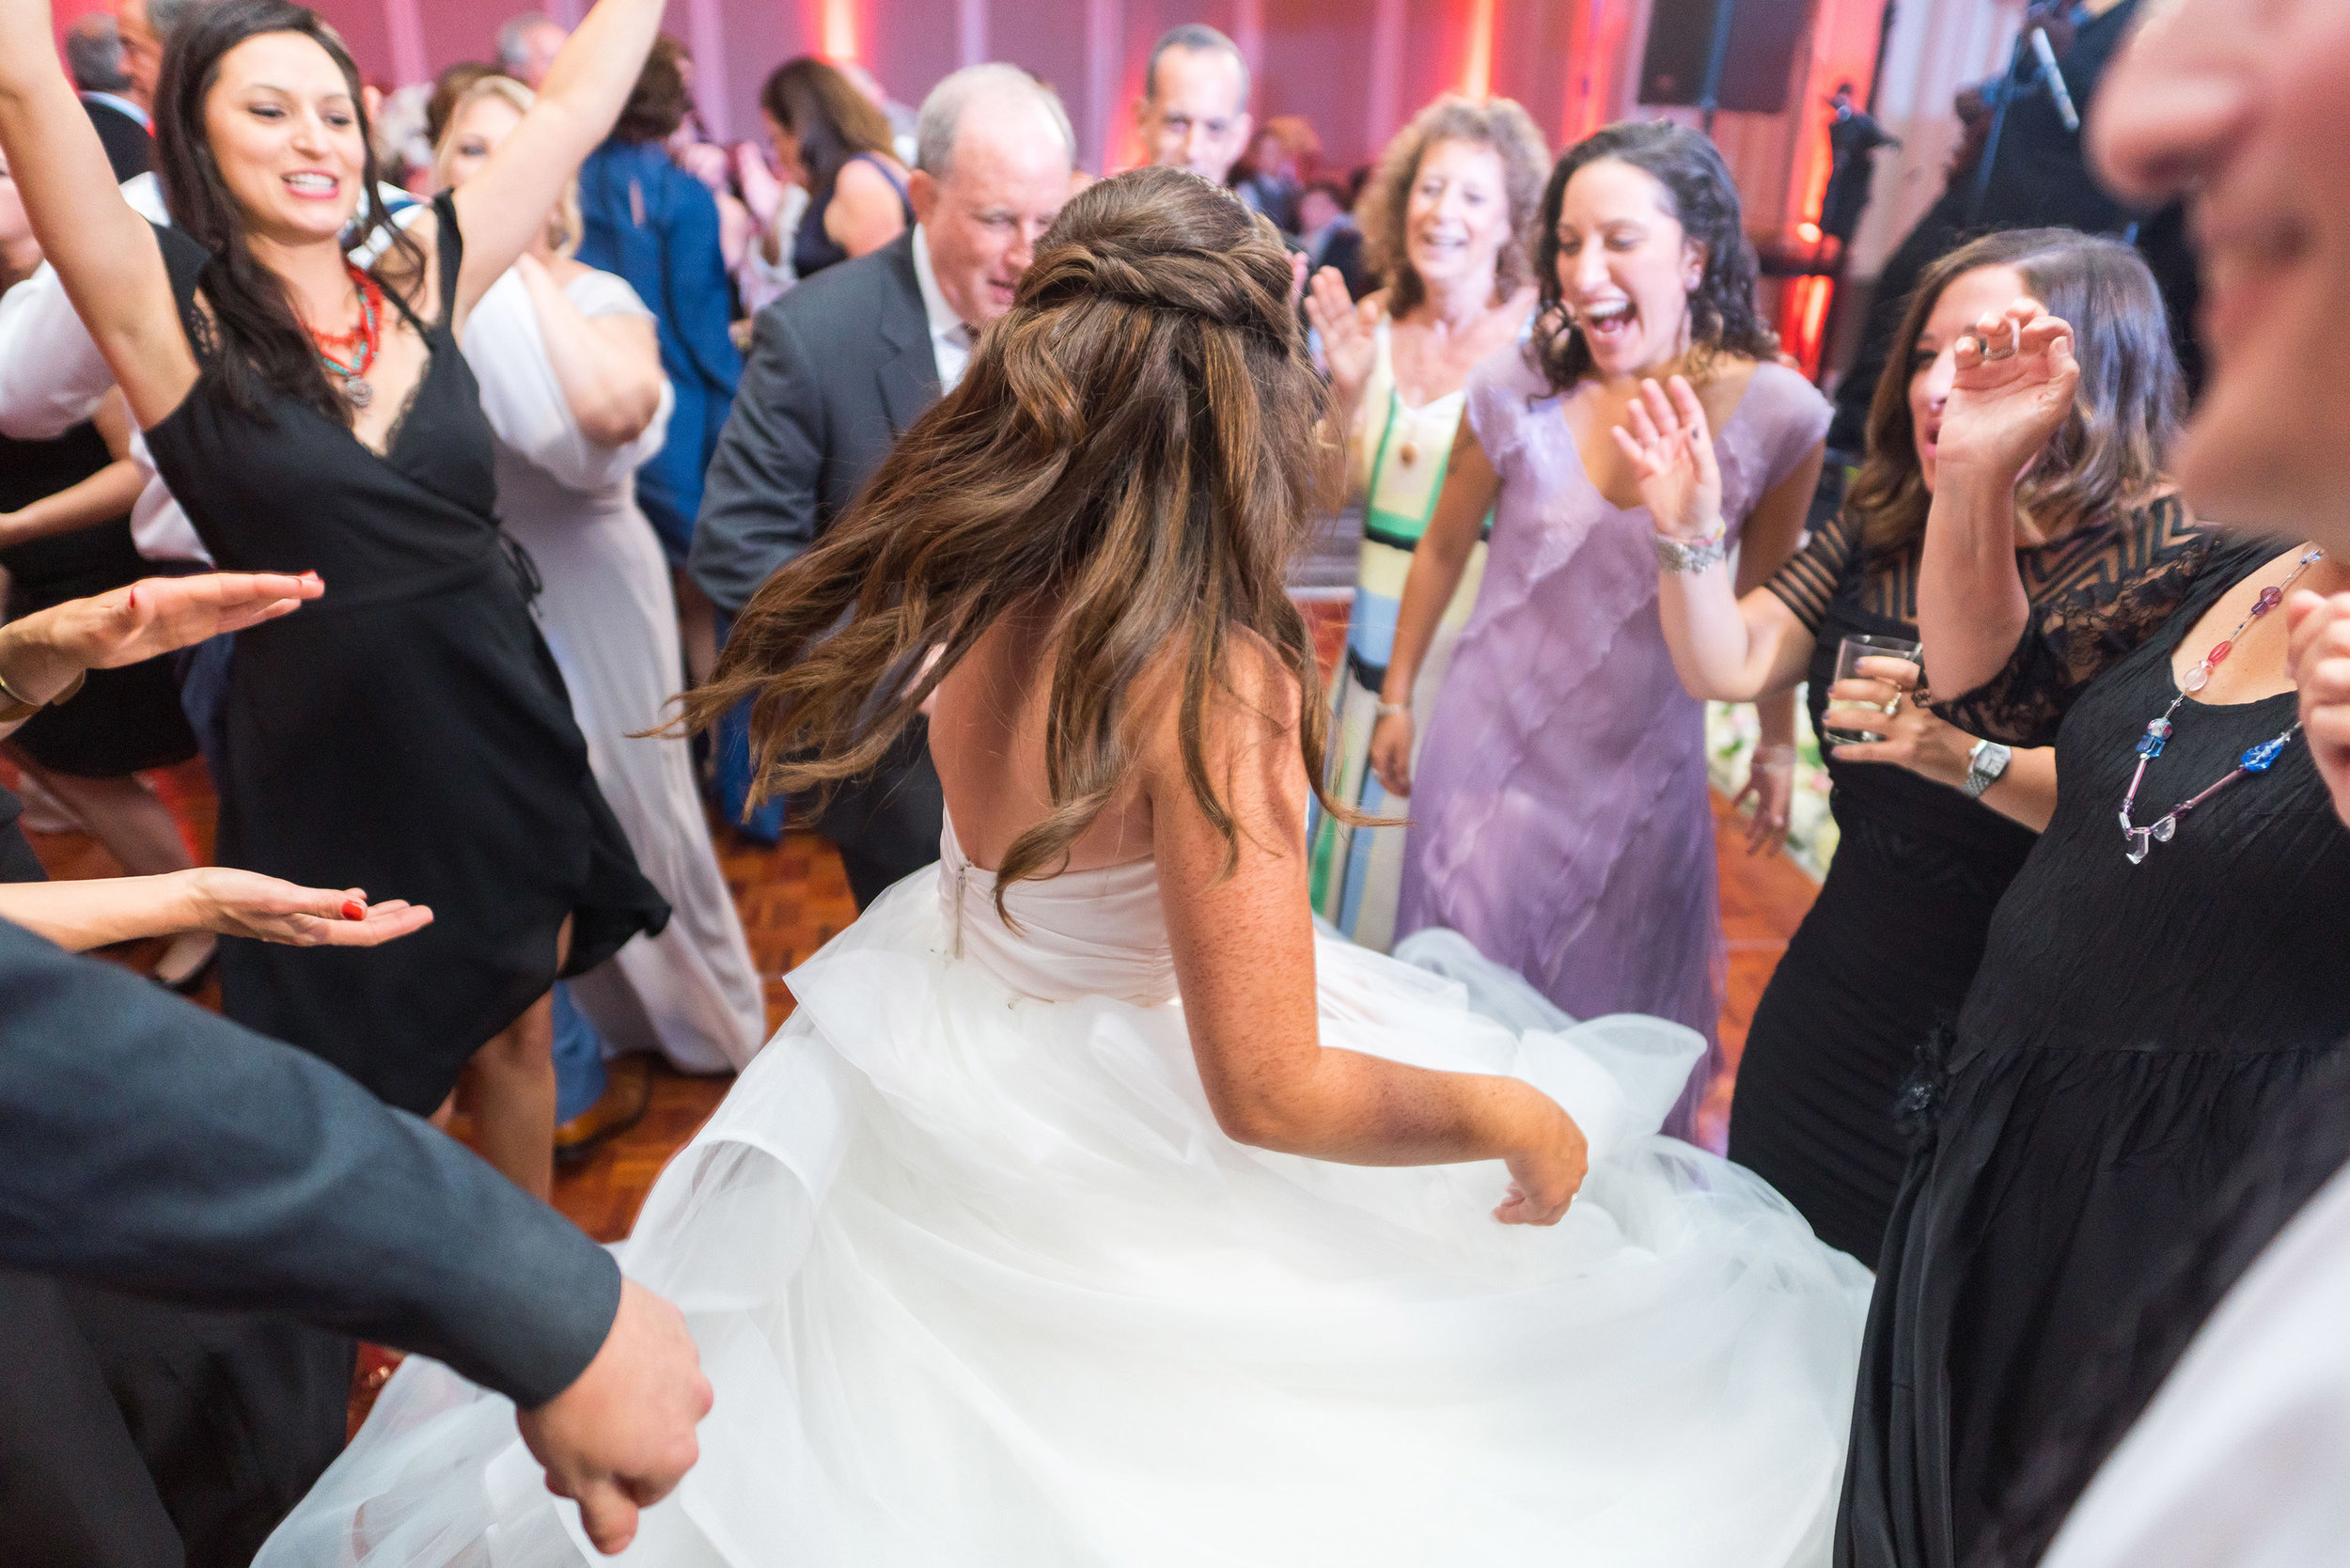 Awesome Jewish wedding reception at Hyatt Regency